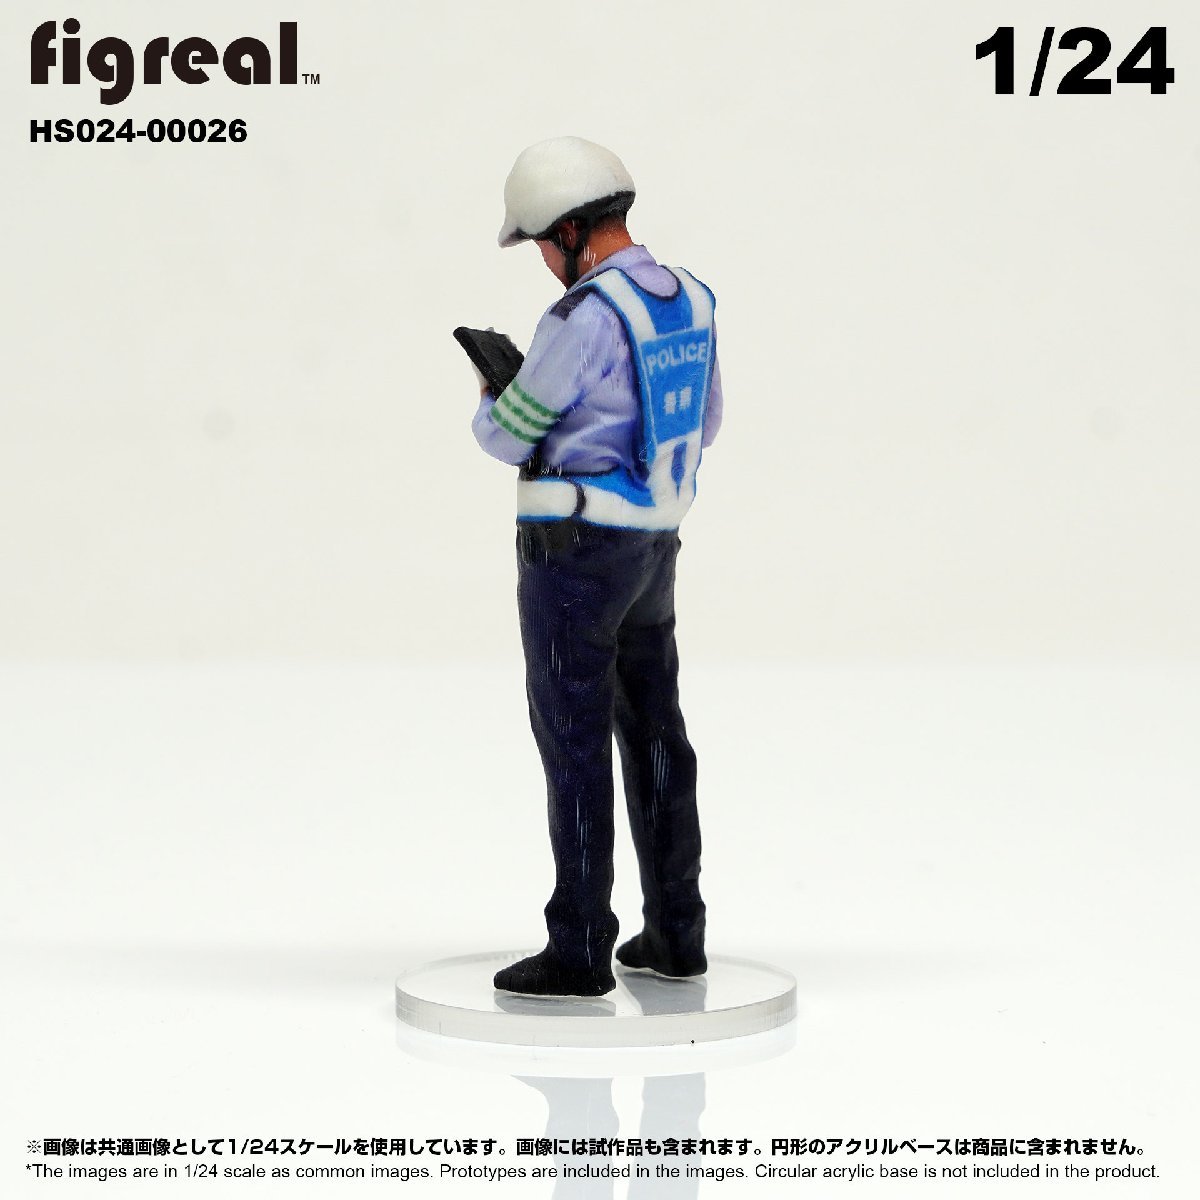 HS024-00026 figreal 日本交通警察官 1/24 高精細フィギュア_画像5